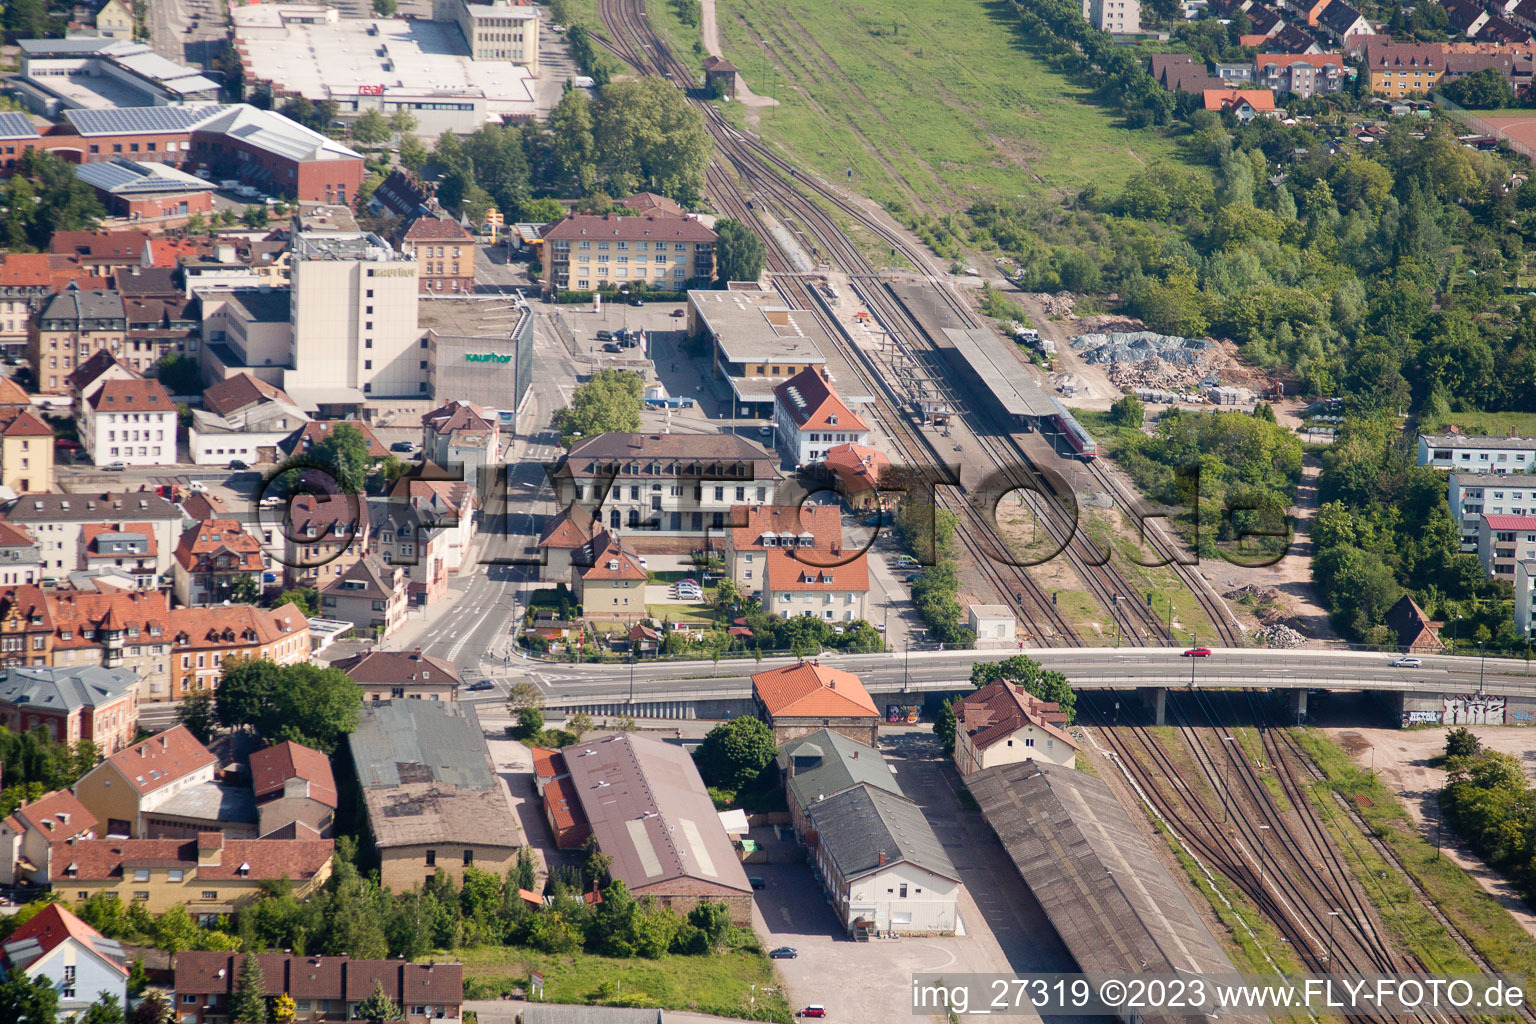 Railroad station in Landau in der Pfalz in the state Rhineland-Palatinate, Germany